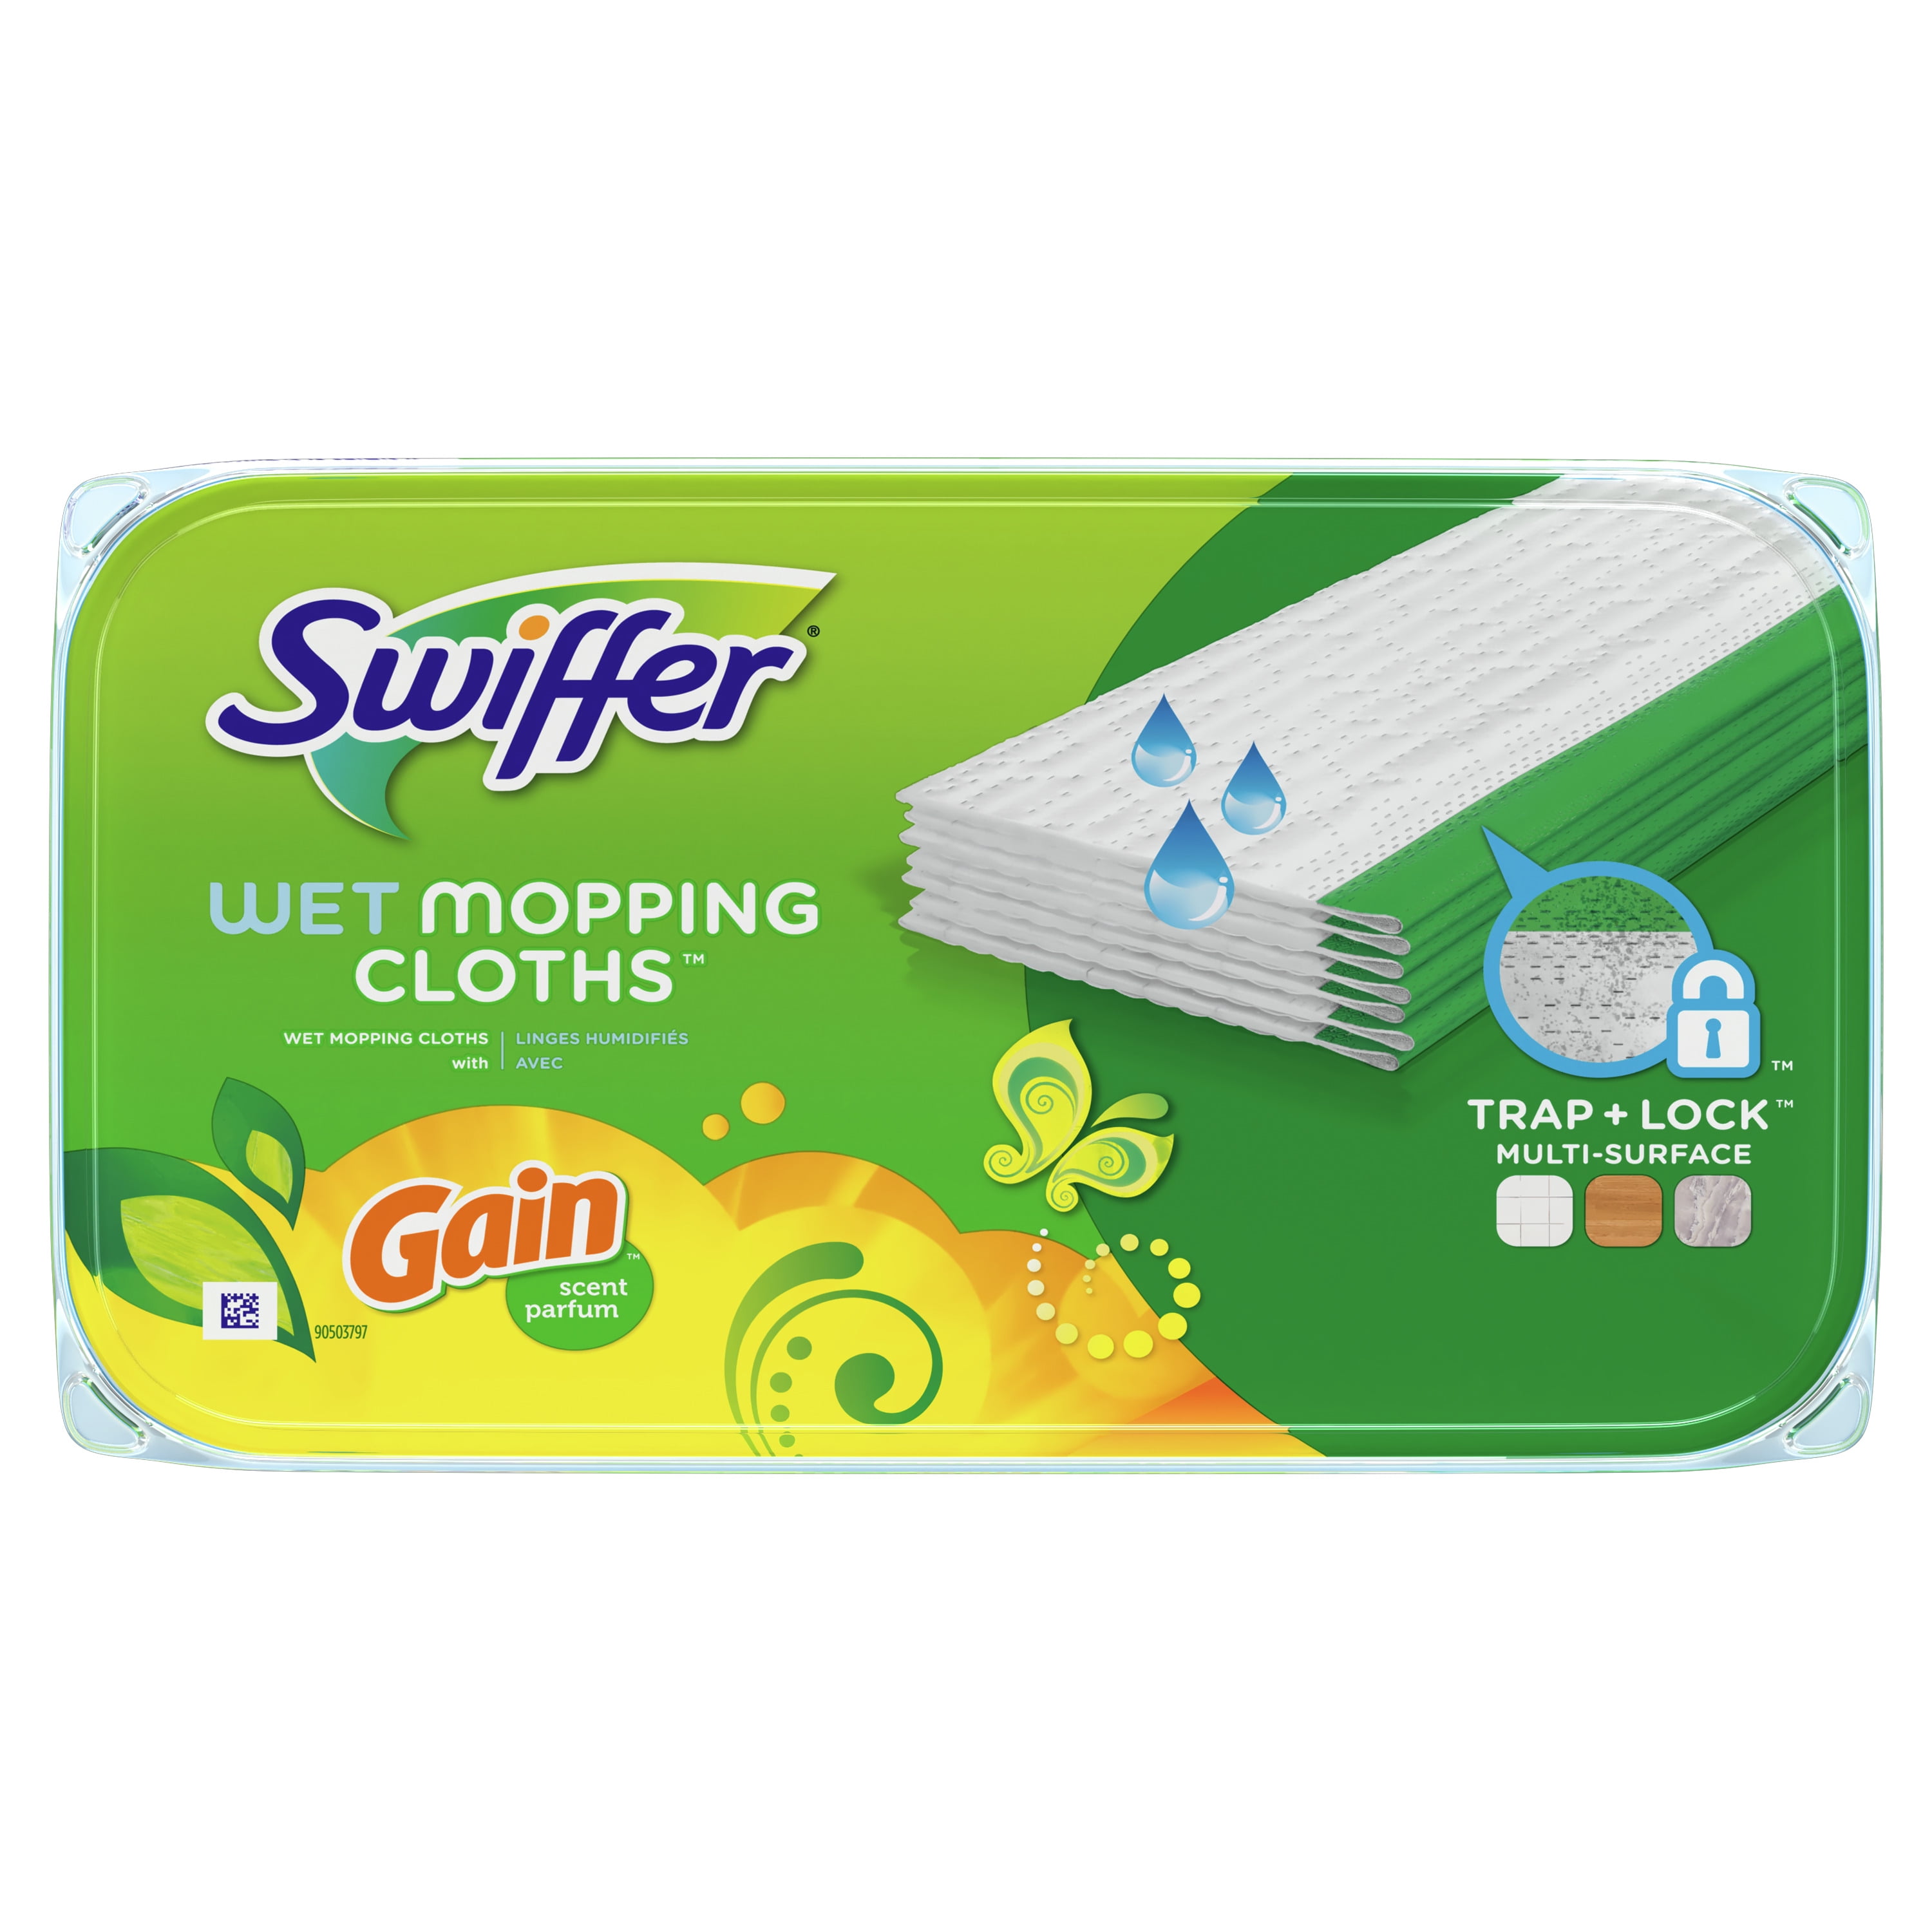 Swiffer Sweeper Wet Mopping Pad Refills for Floor Mop Open Window Fresh Scent 12 